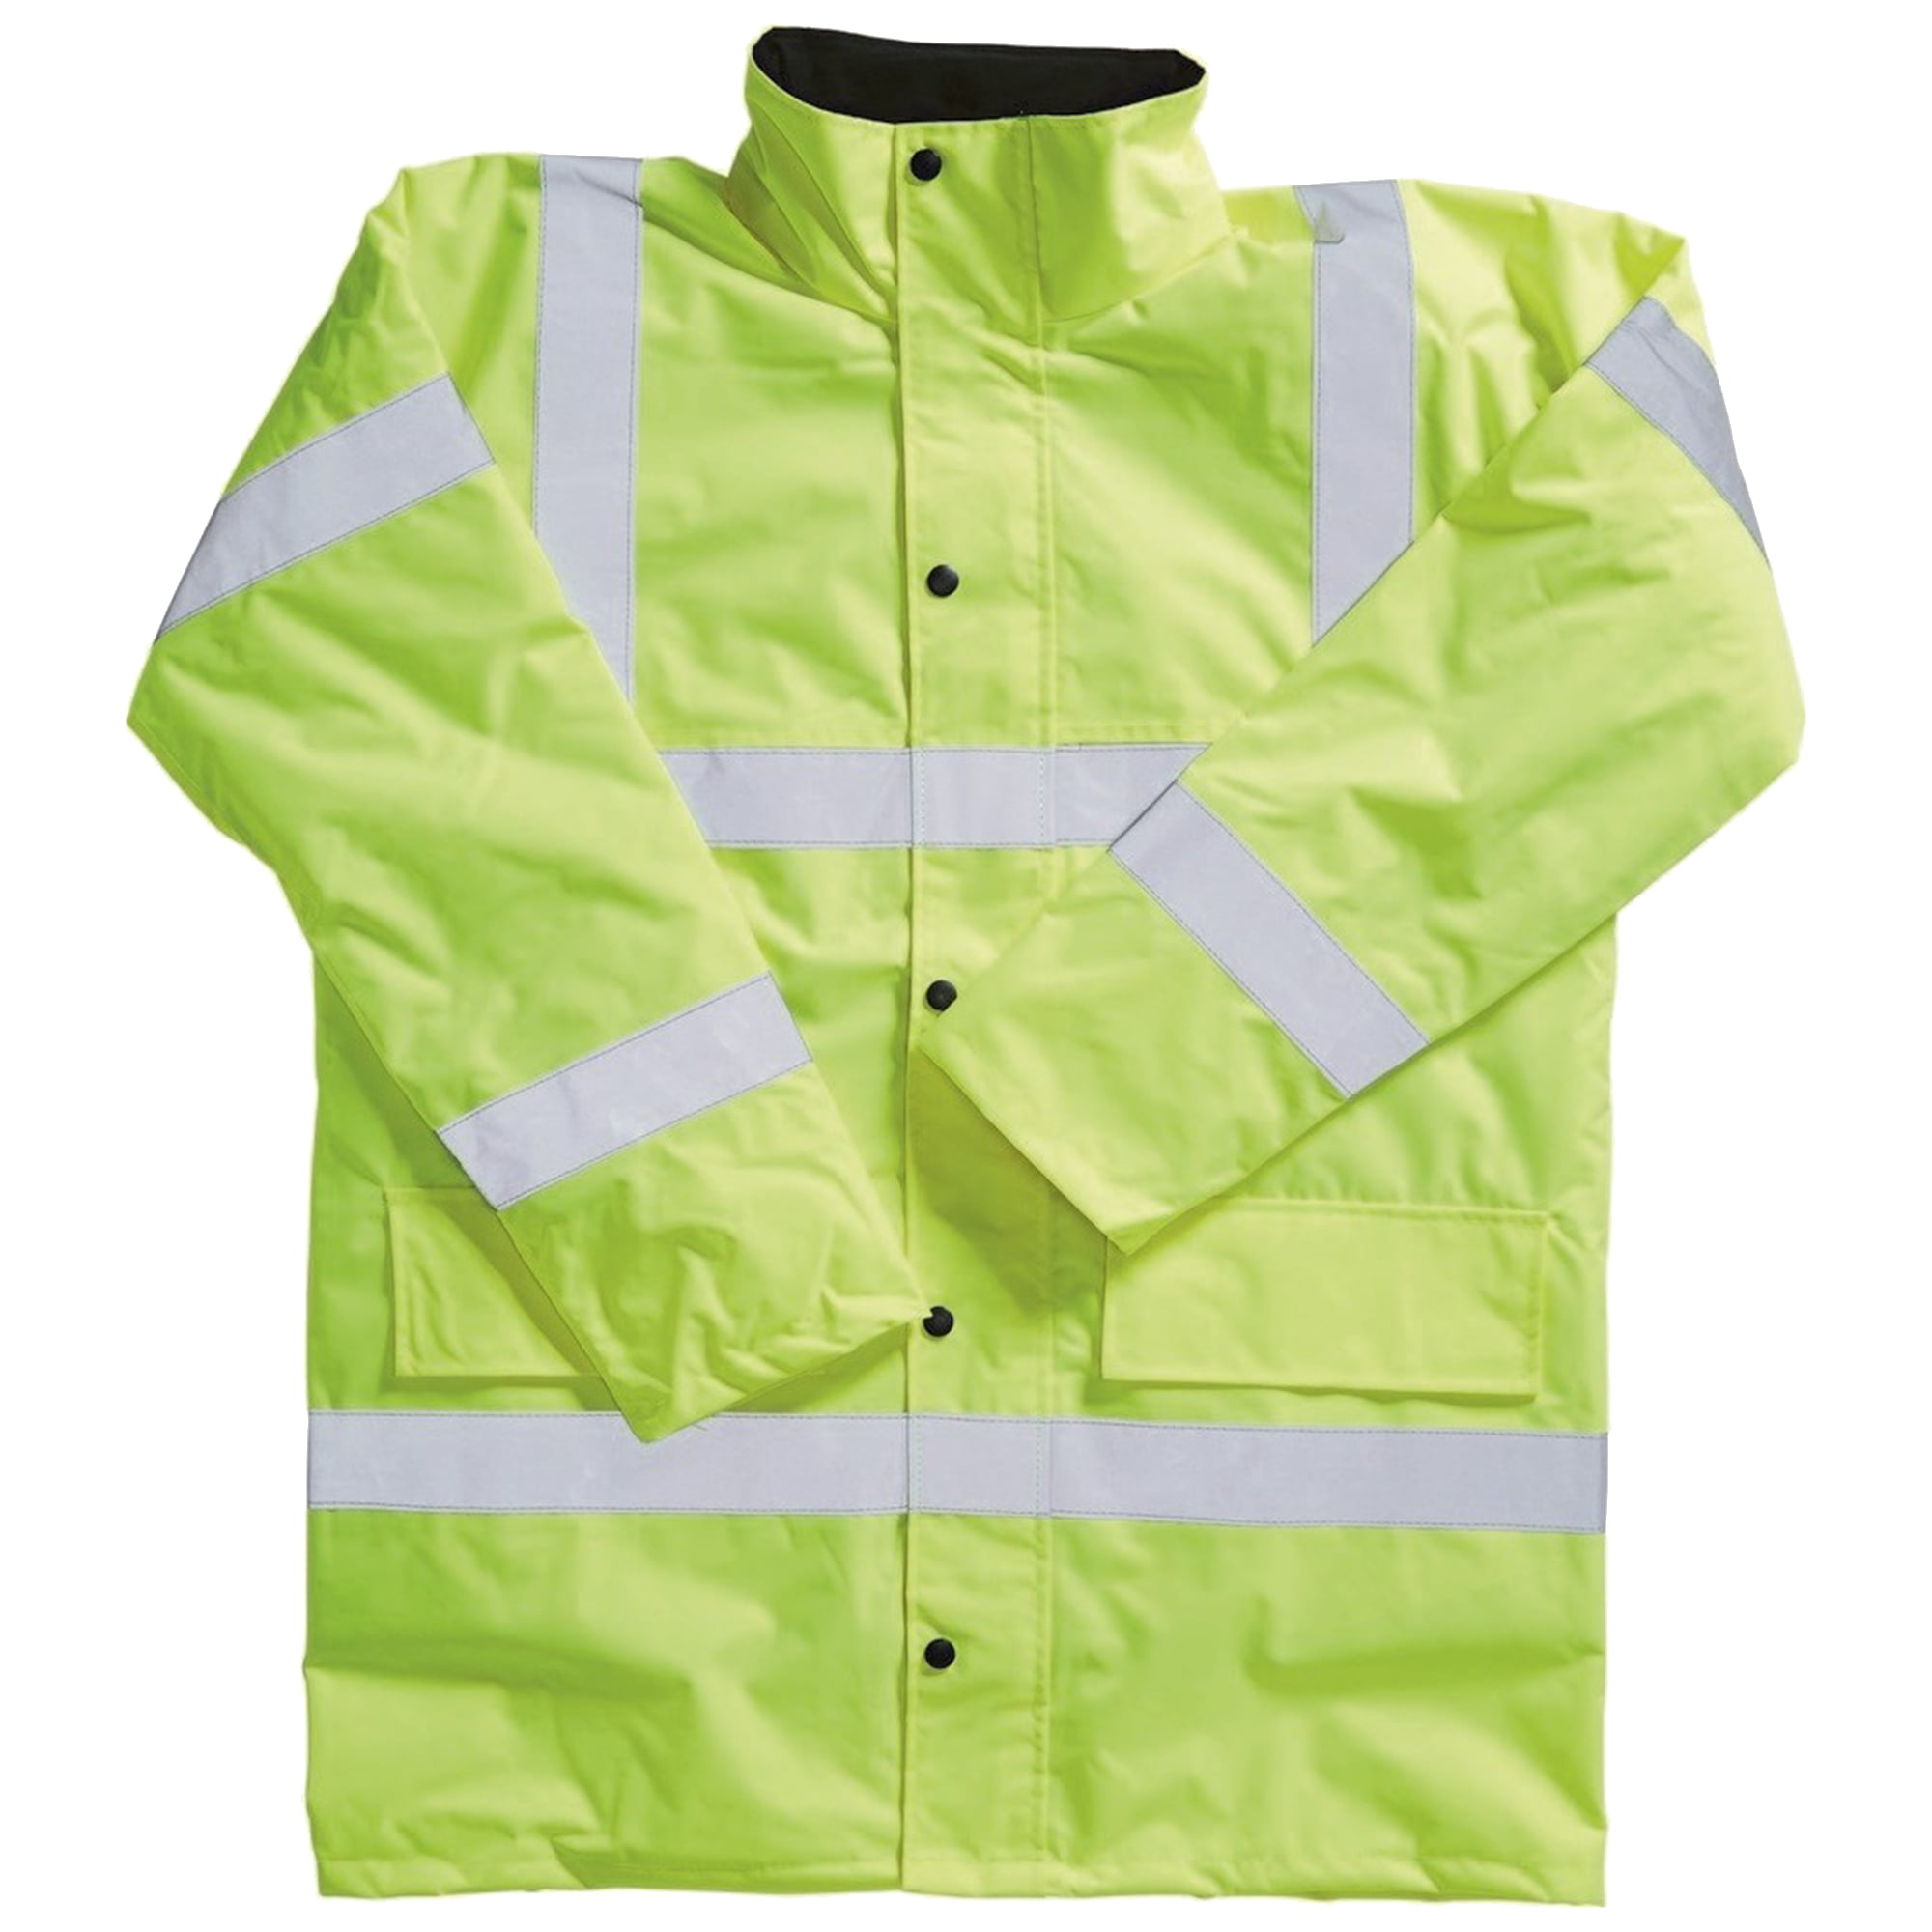 Blackrock Hi Vis Yellow Orange Safety Vest Waistcoat EN471 printed or plain 